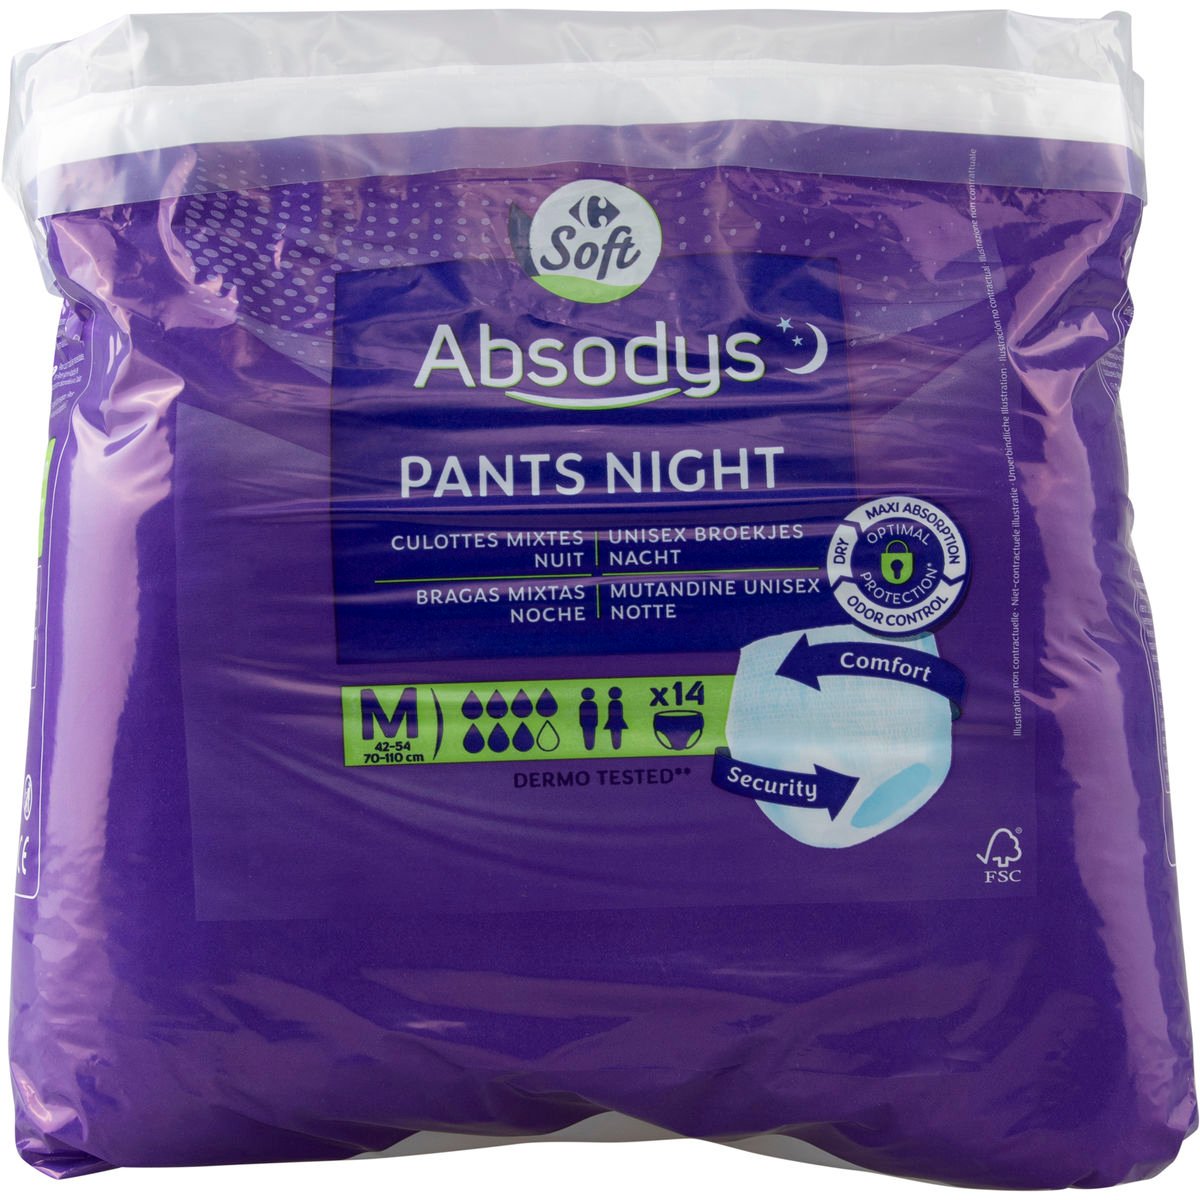 Carrefour Soft Absodys Pants Night Unisex Broekjes Nacht M 14 Stuks